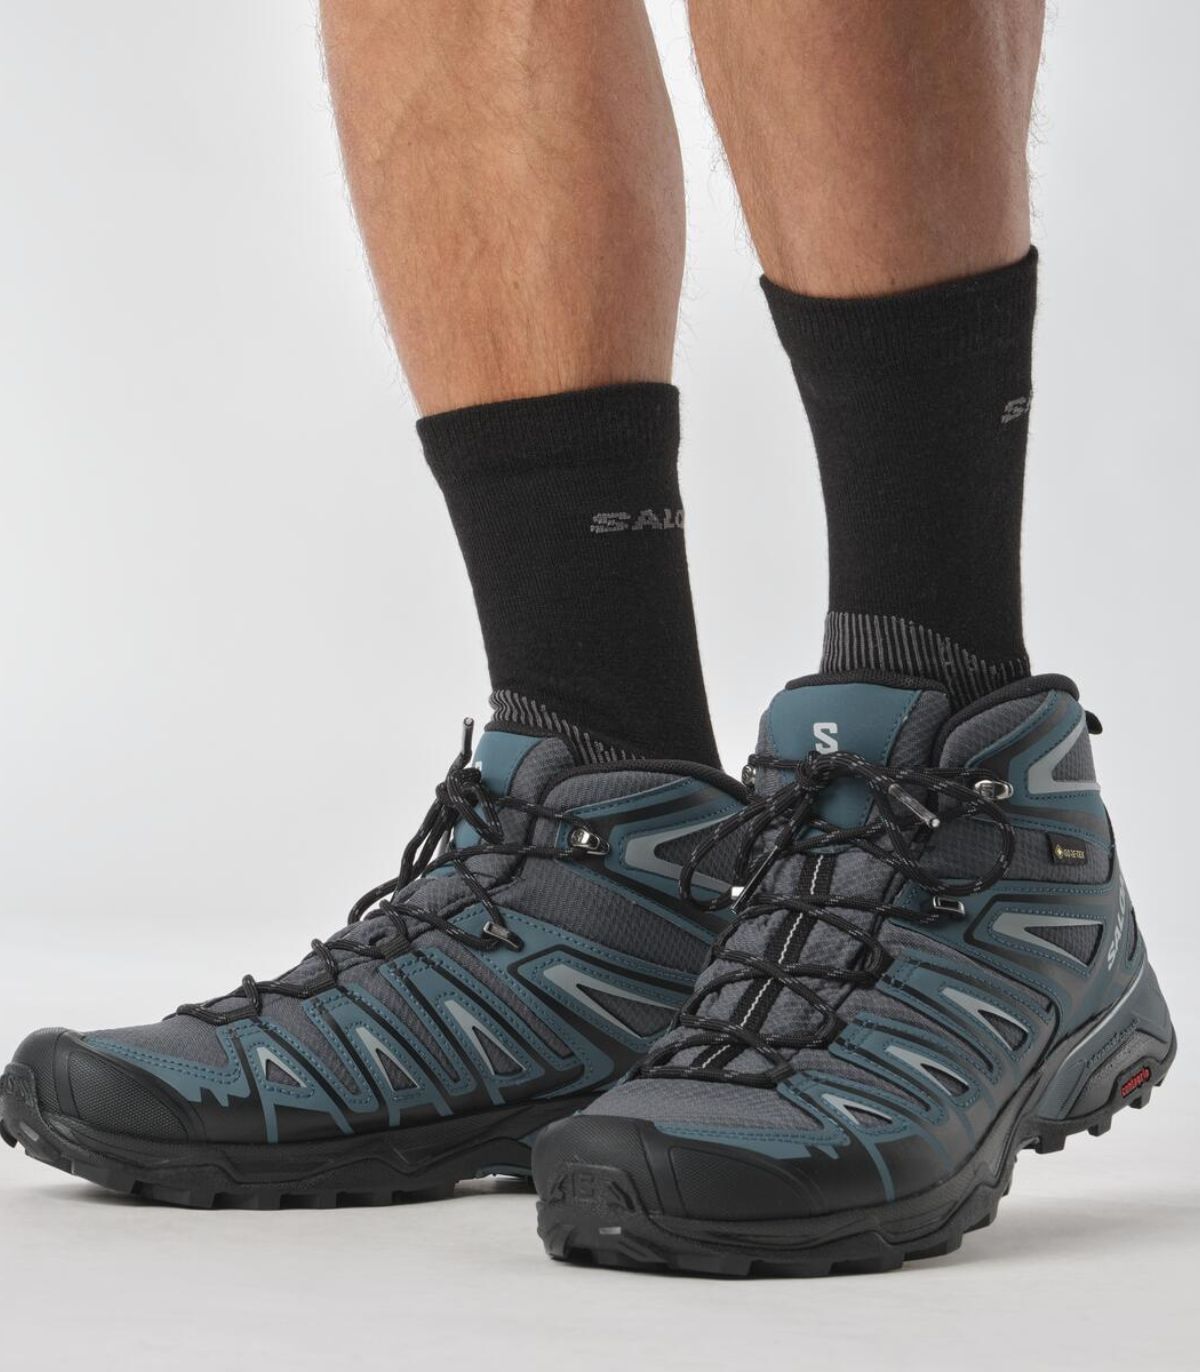 Salomon - X Ultra 3 - Zapatillas de trekking - Hombre